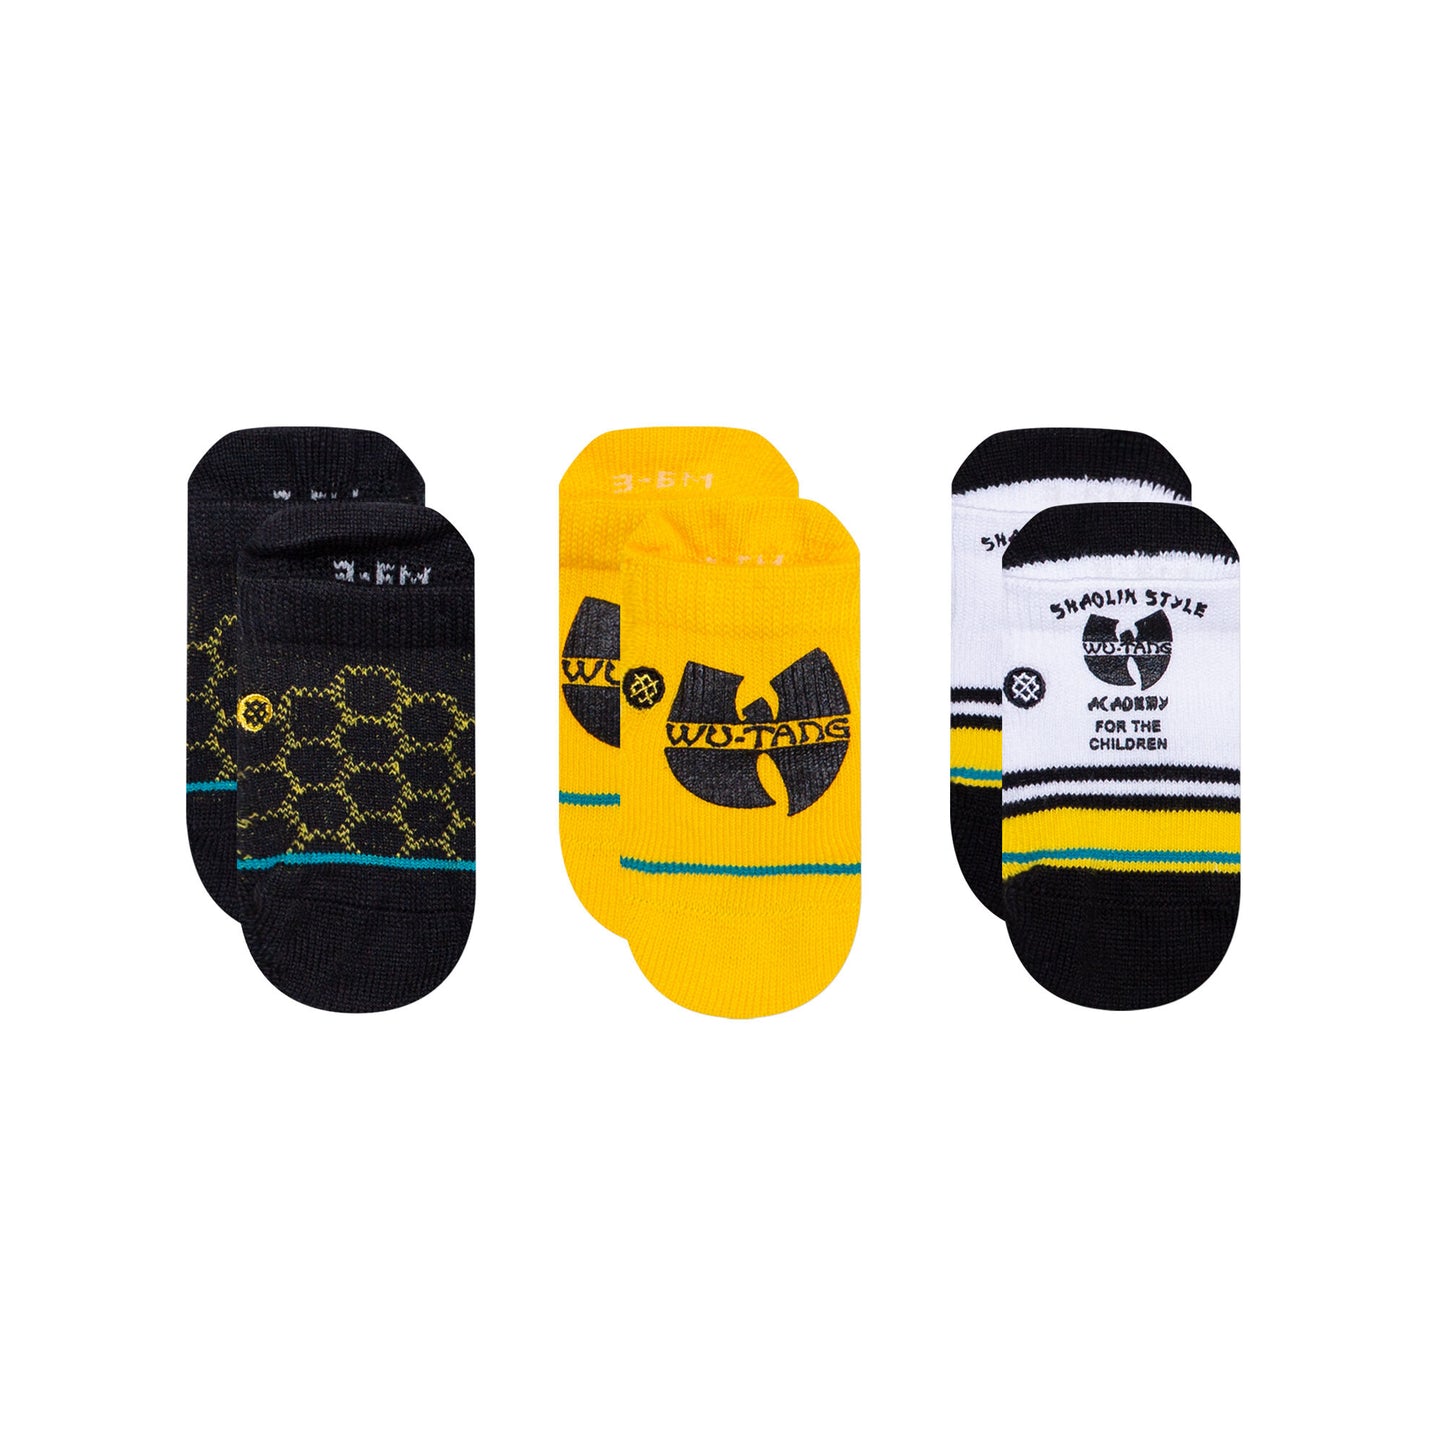 Stance x Wu-Tang Clan - Wu-Tang 3 Pack Baby Socks, Multi